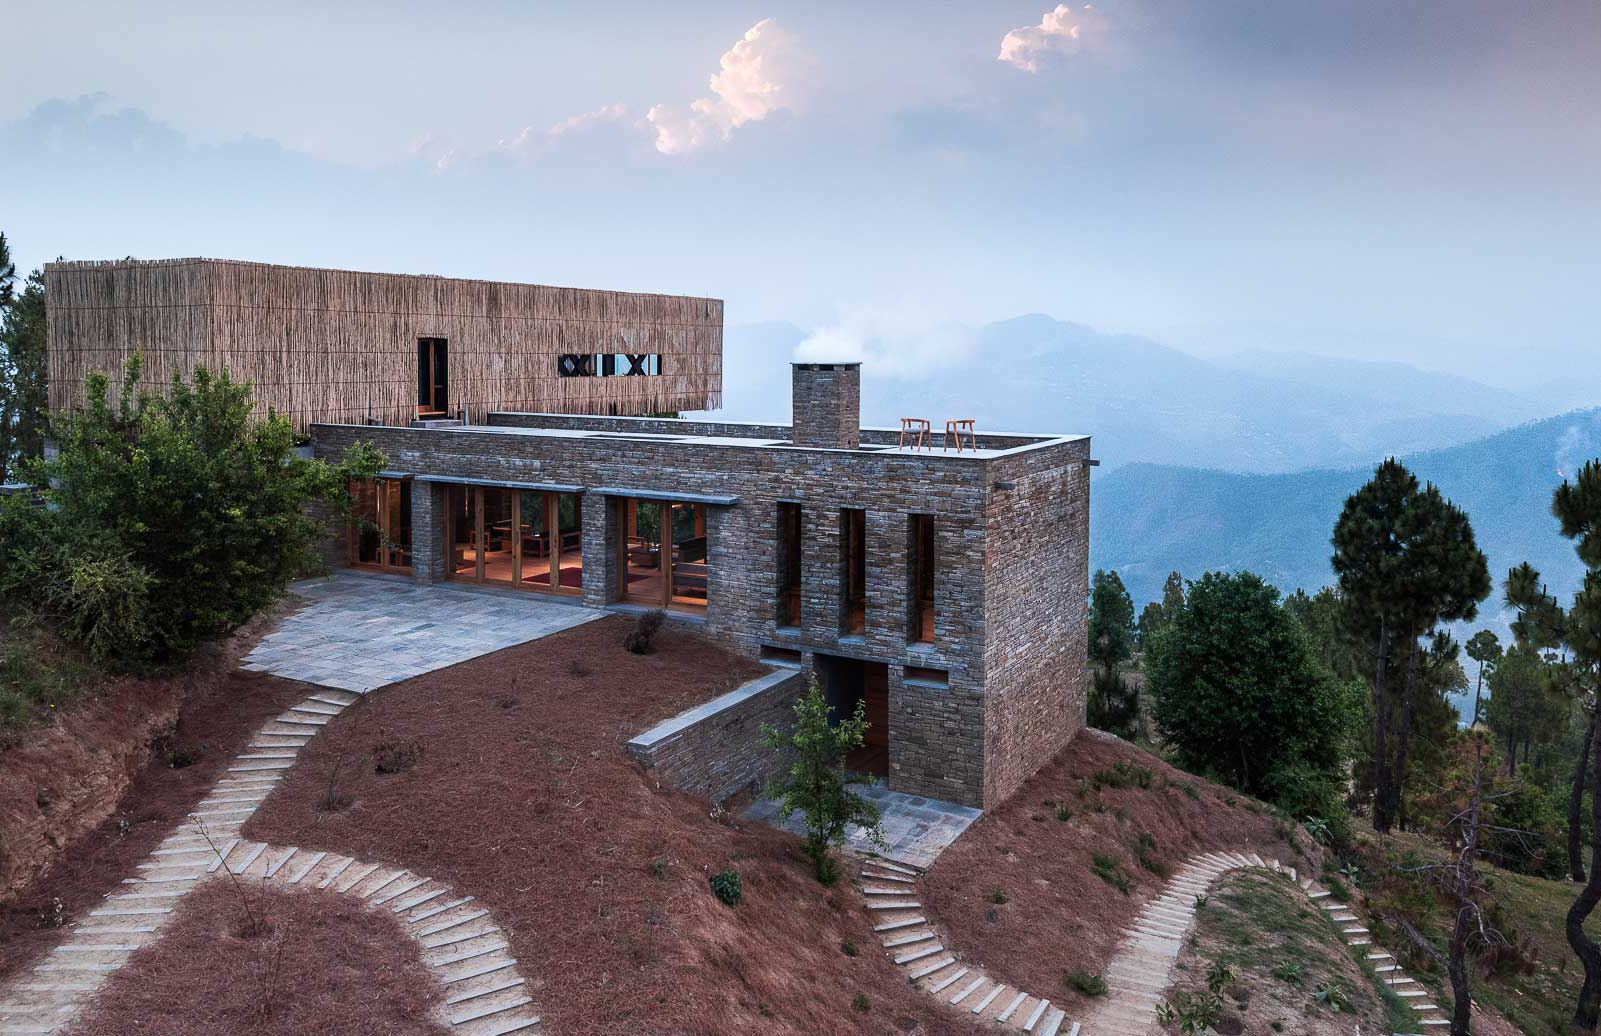 The Kumaon hotel in the Himalayas